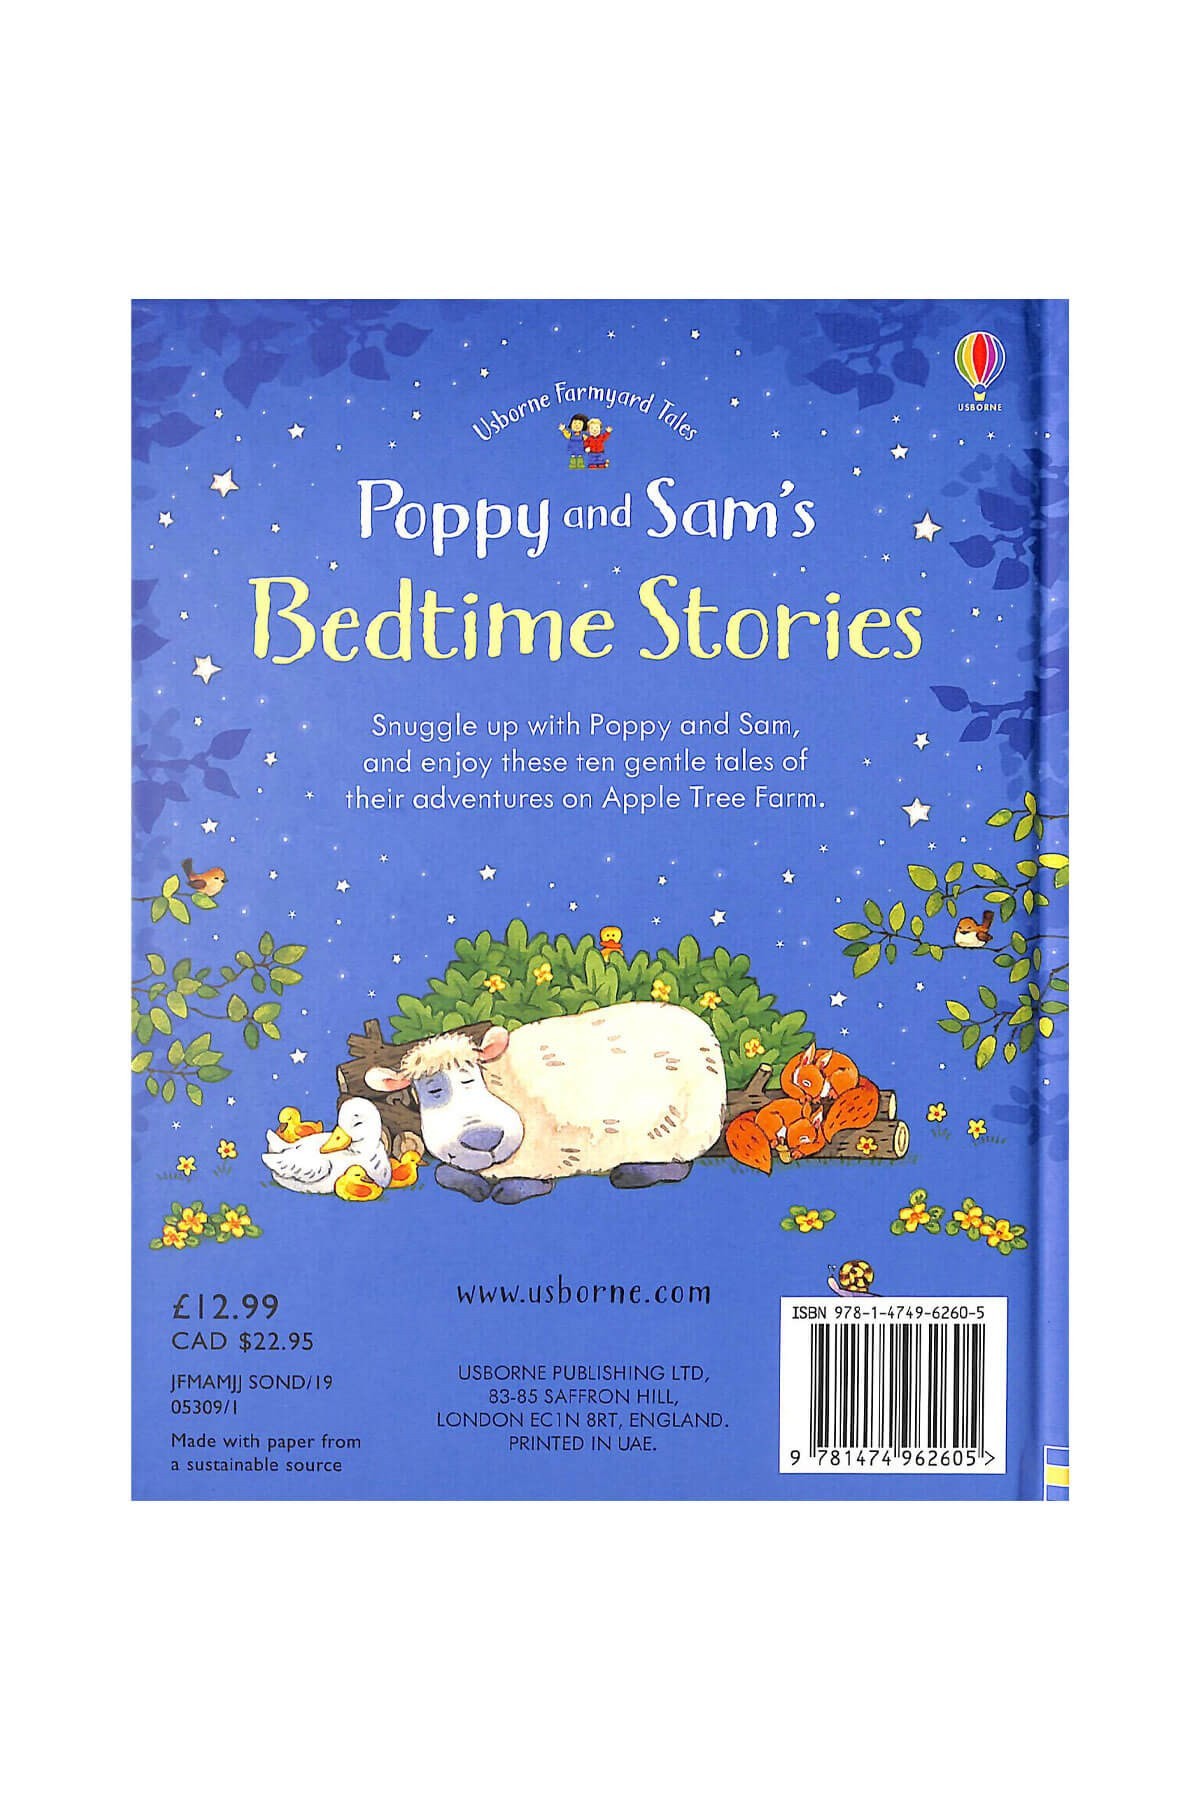 The Usborne Fyt Poppy And Sam'S Bedtime Stories